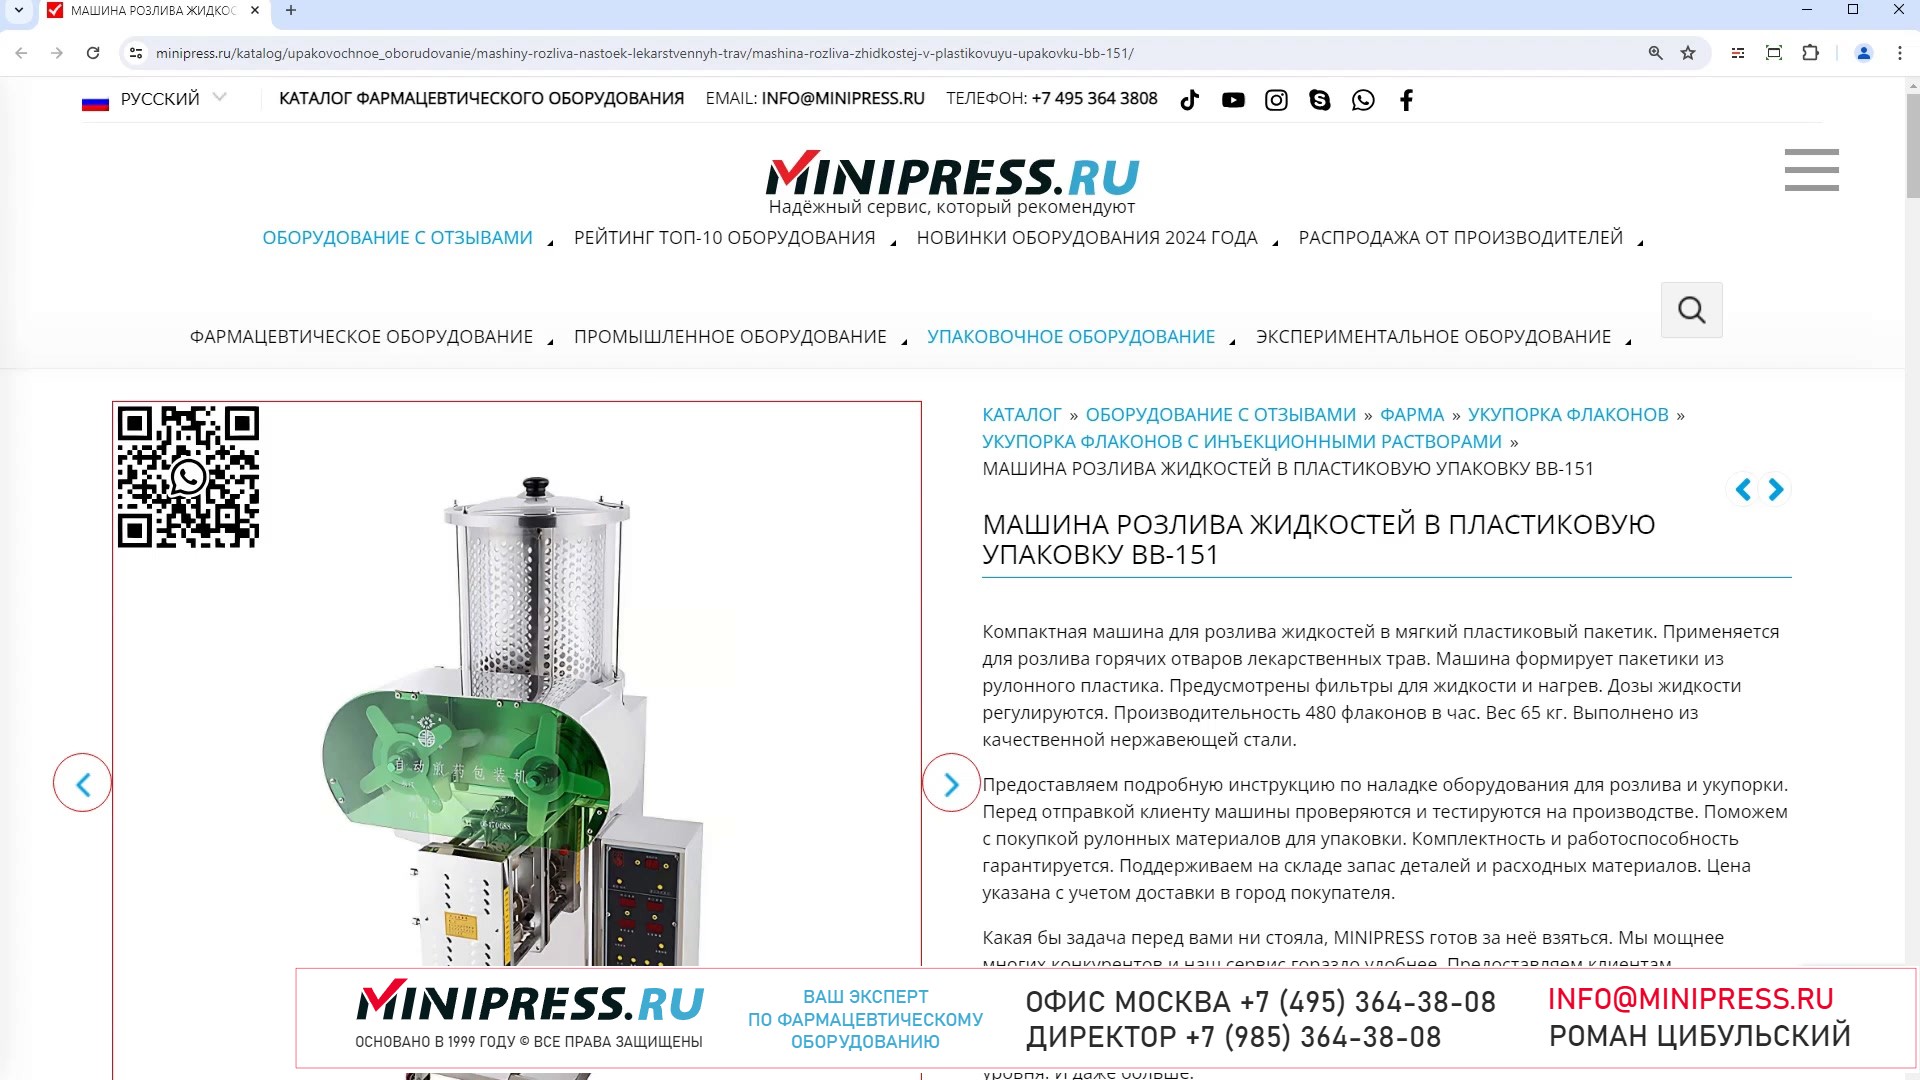 Minipress.ru Машина розлива жидкостей в пластиковую упаковку  BB-151